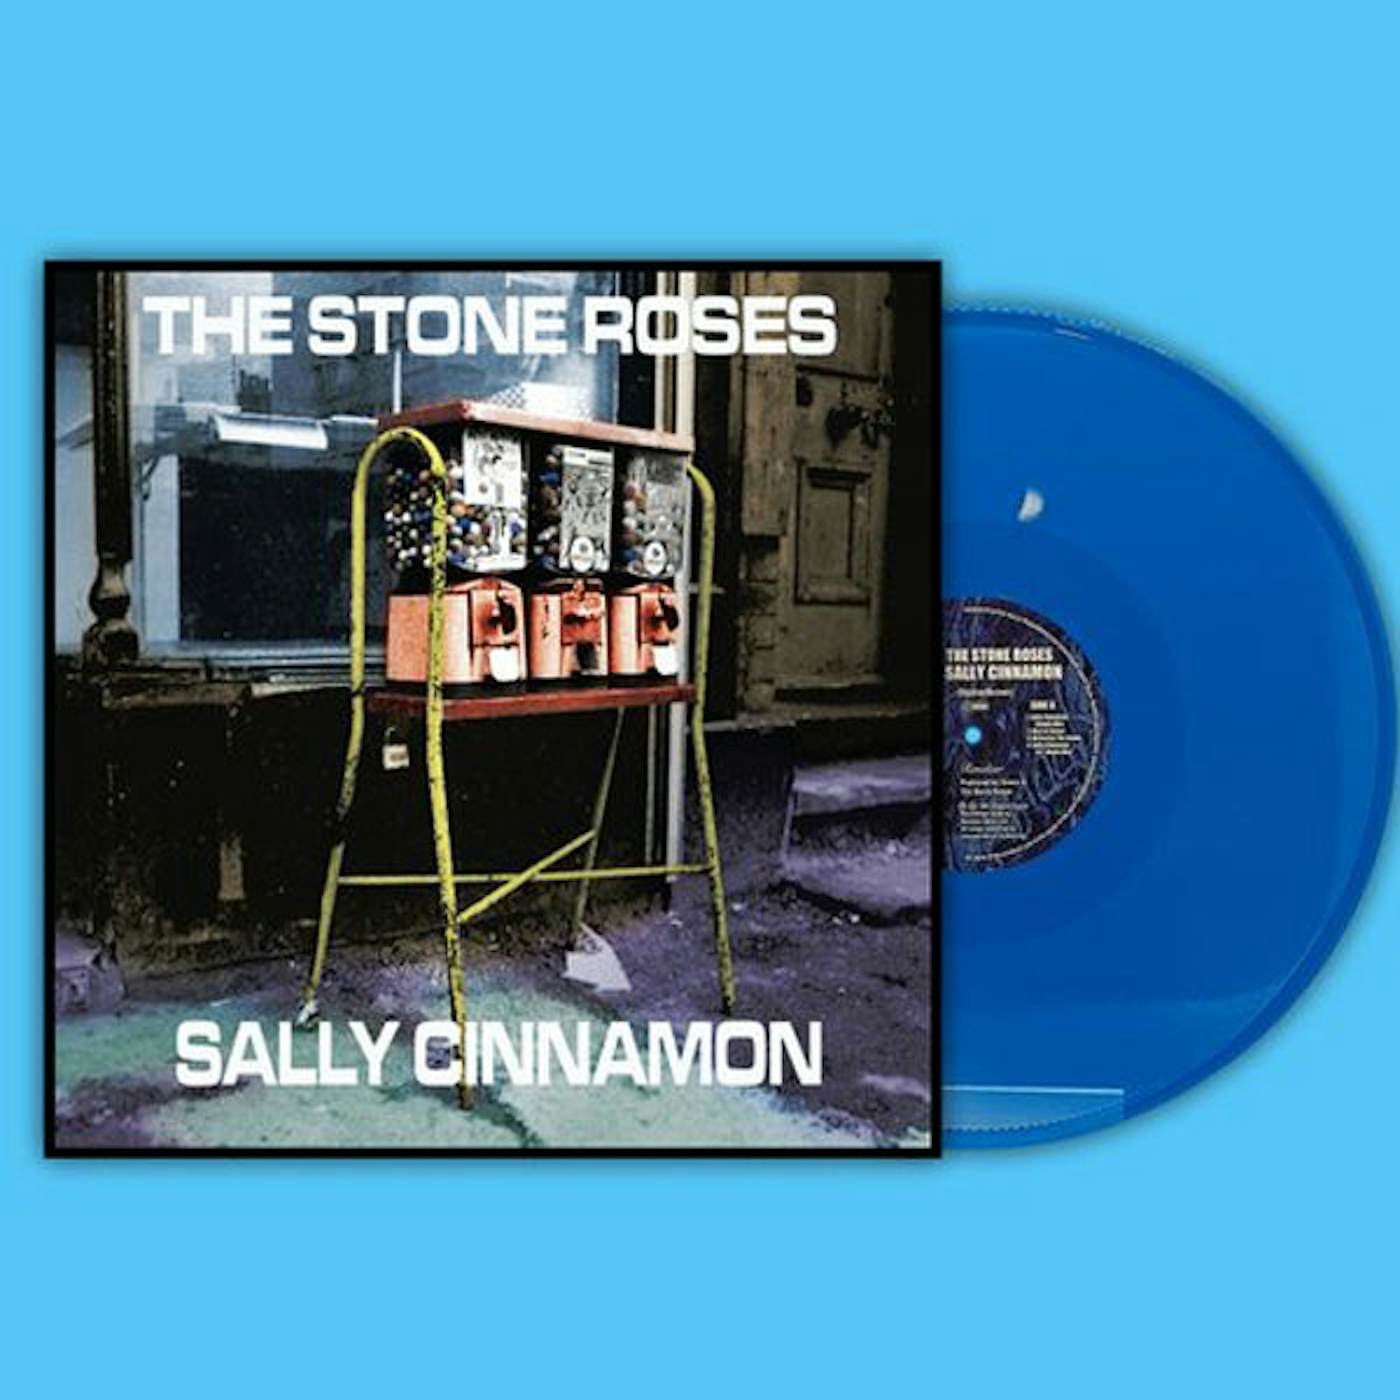 The Stone Roses LP - Sally Cinnamon + Live (Blue Vinyl)